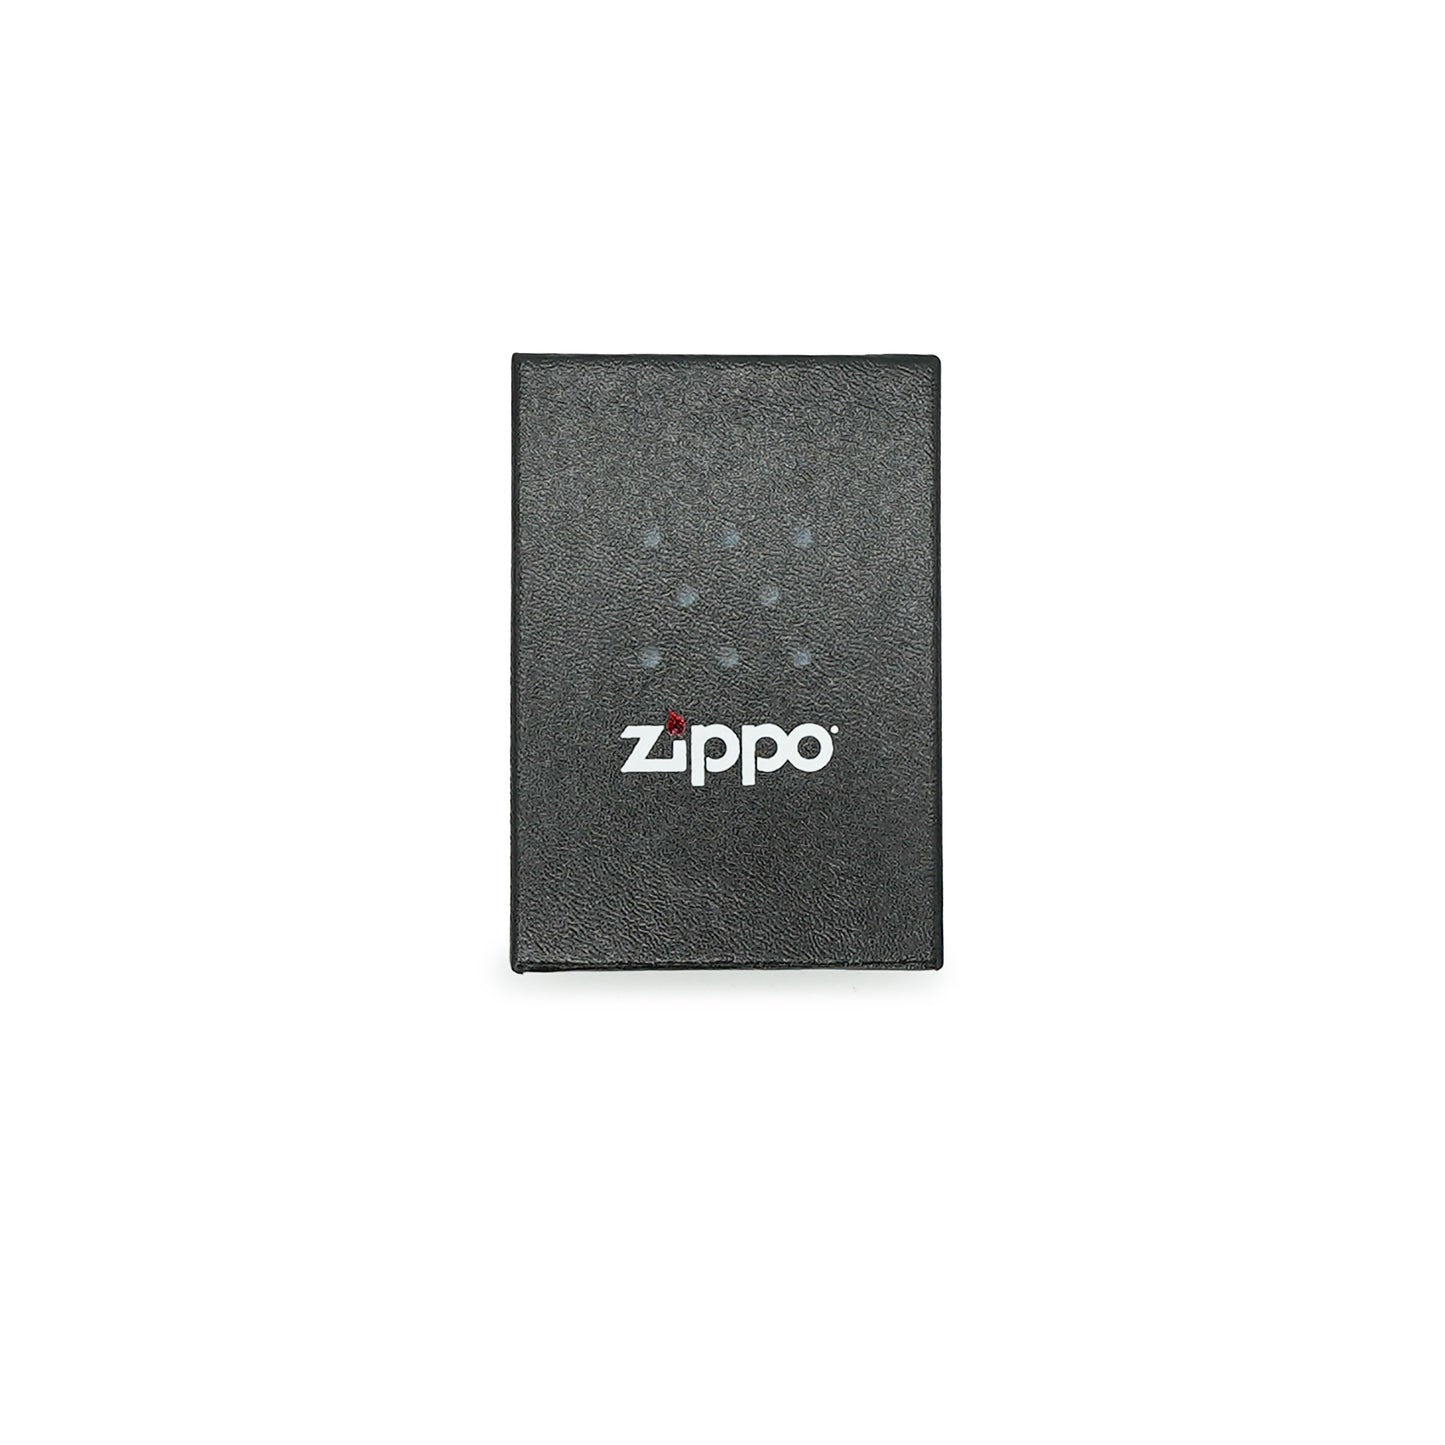 Chapter 17 - Zippo Lighter - C17 - Polished Brass